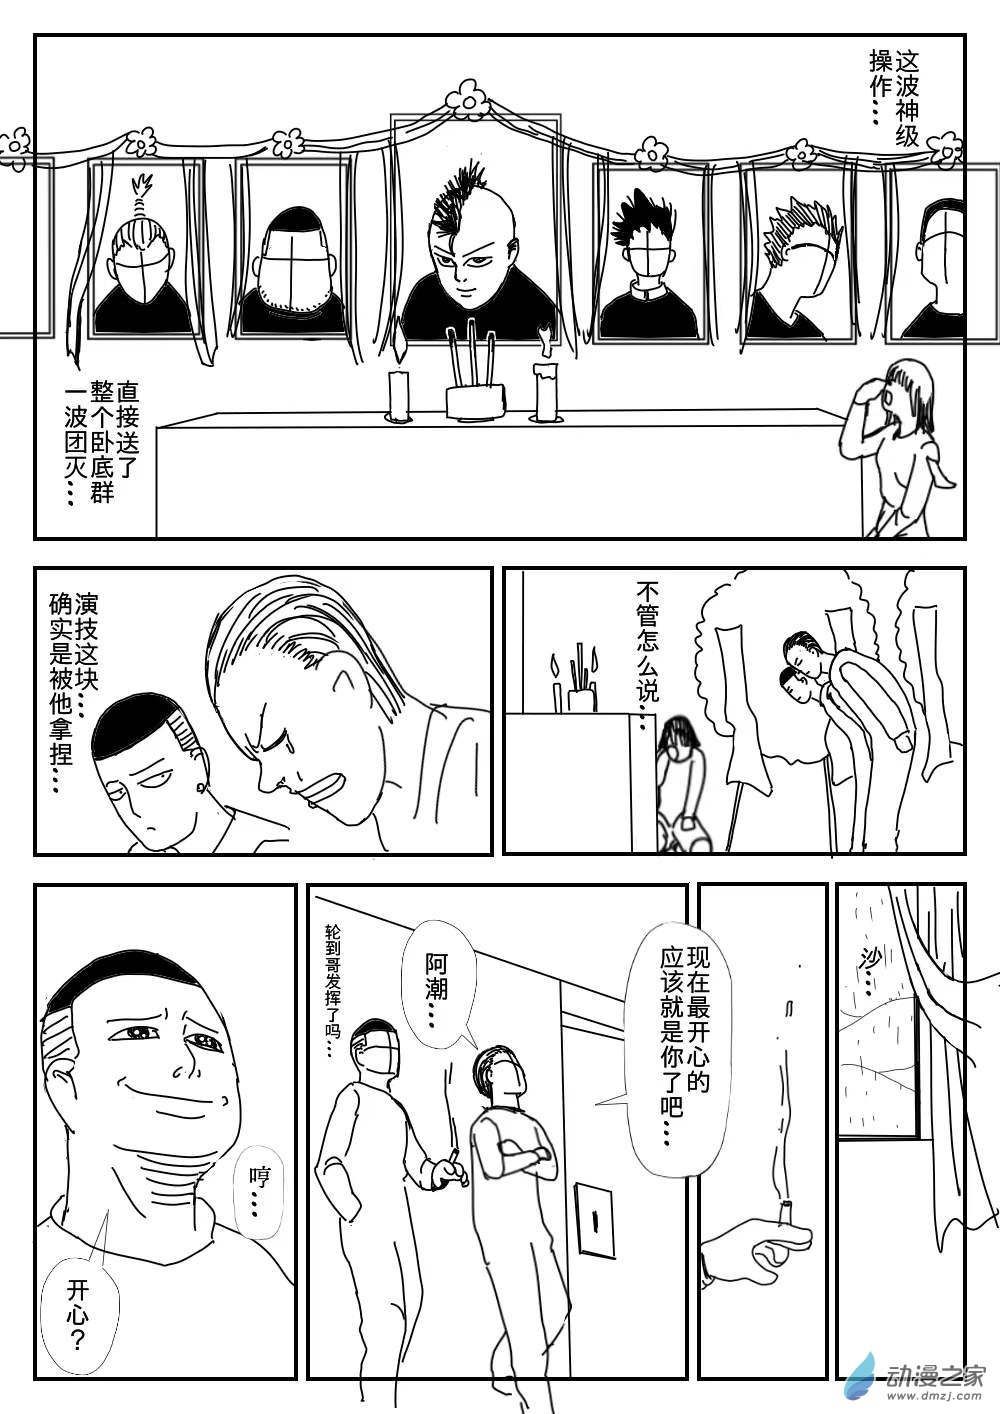 K神的短篇漫畫集 - 01 臥底阿潮 - 1